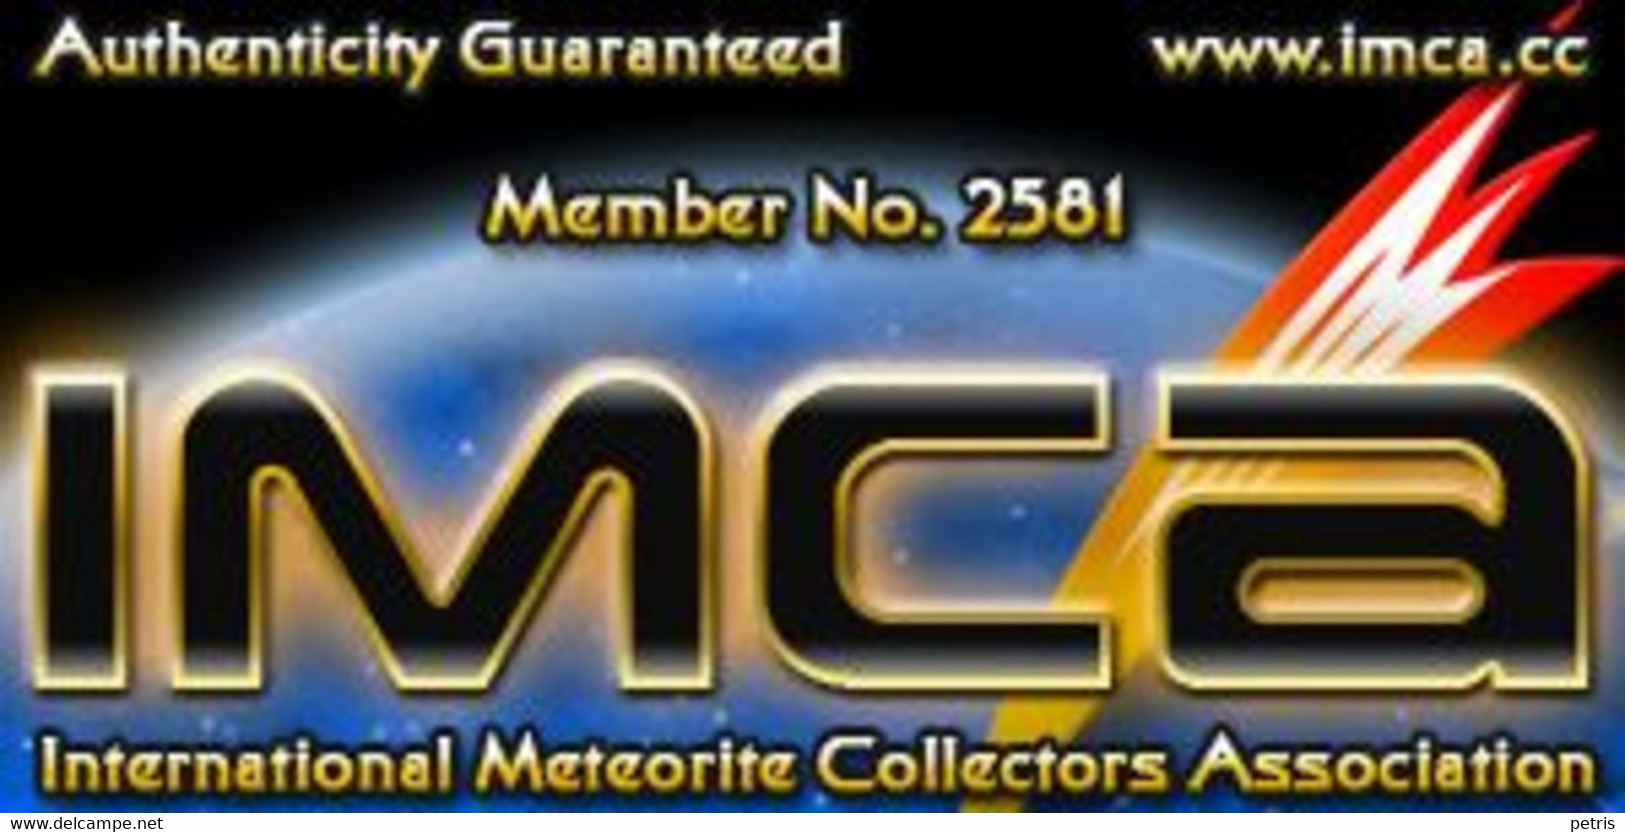 Meteorite Diogenite NWA 6690  (Morocco) - 5.8 Gr - Meteorieten